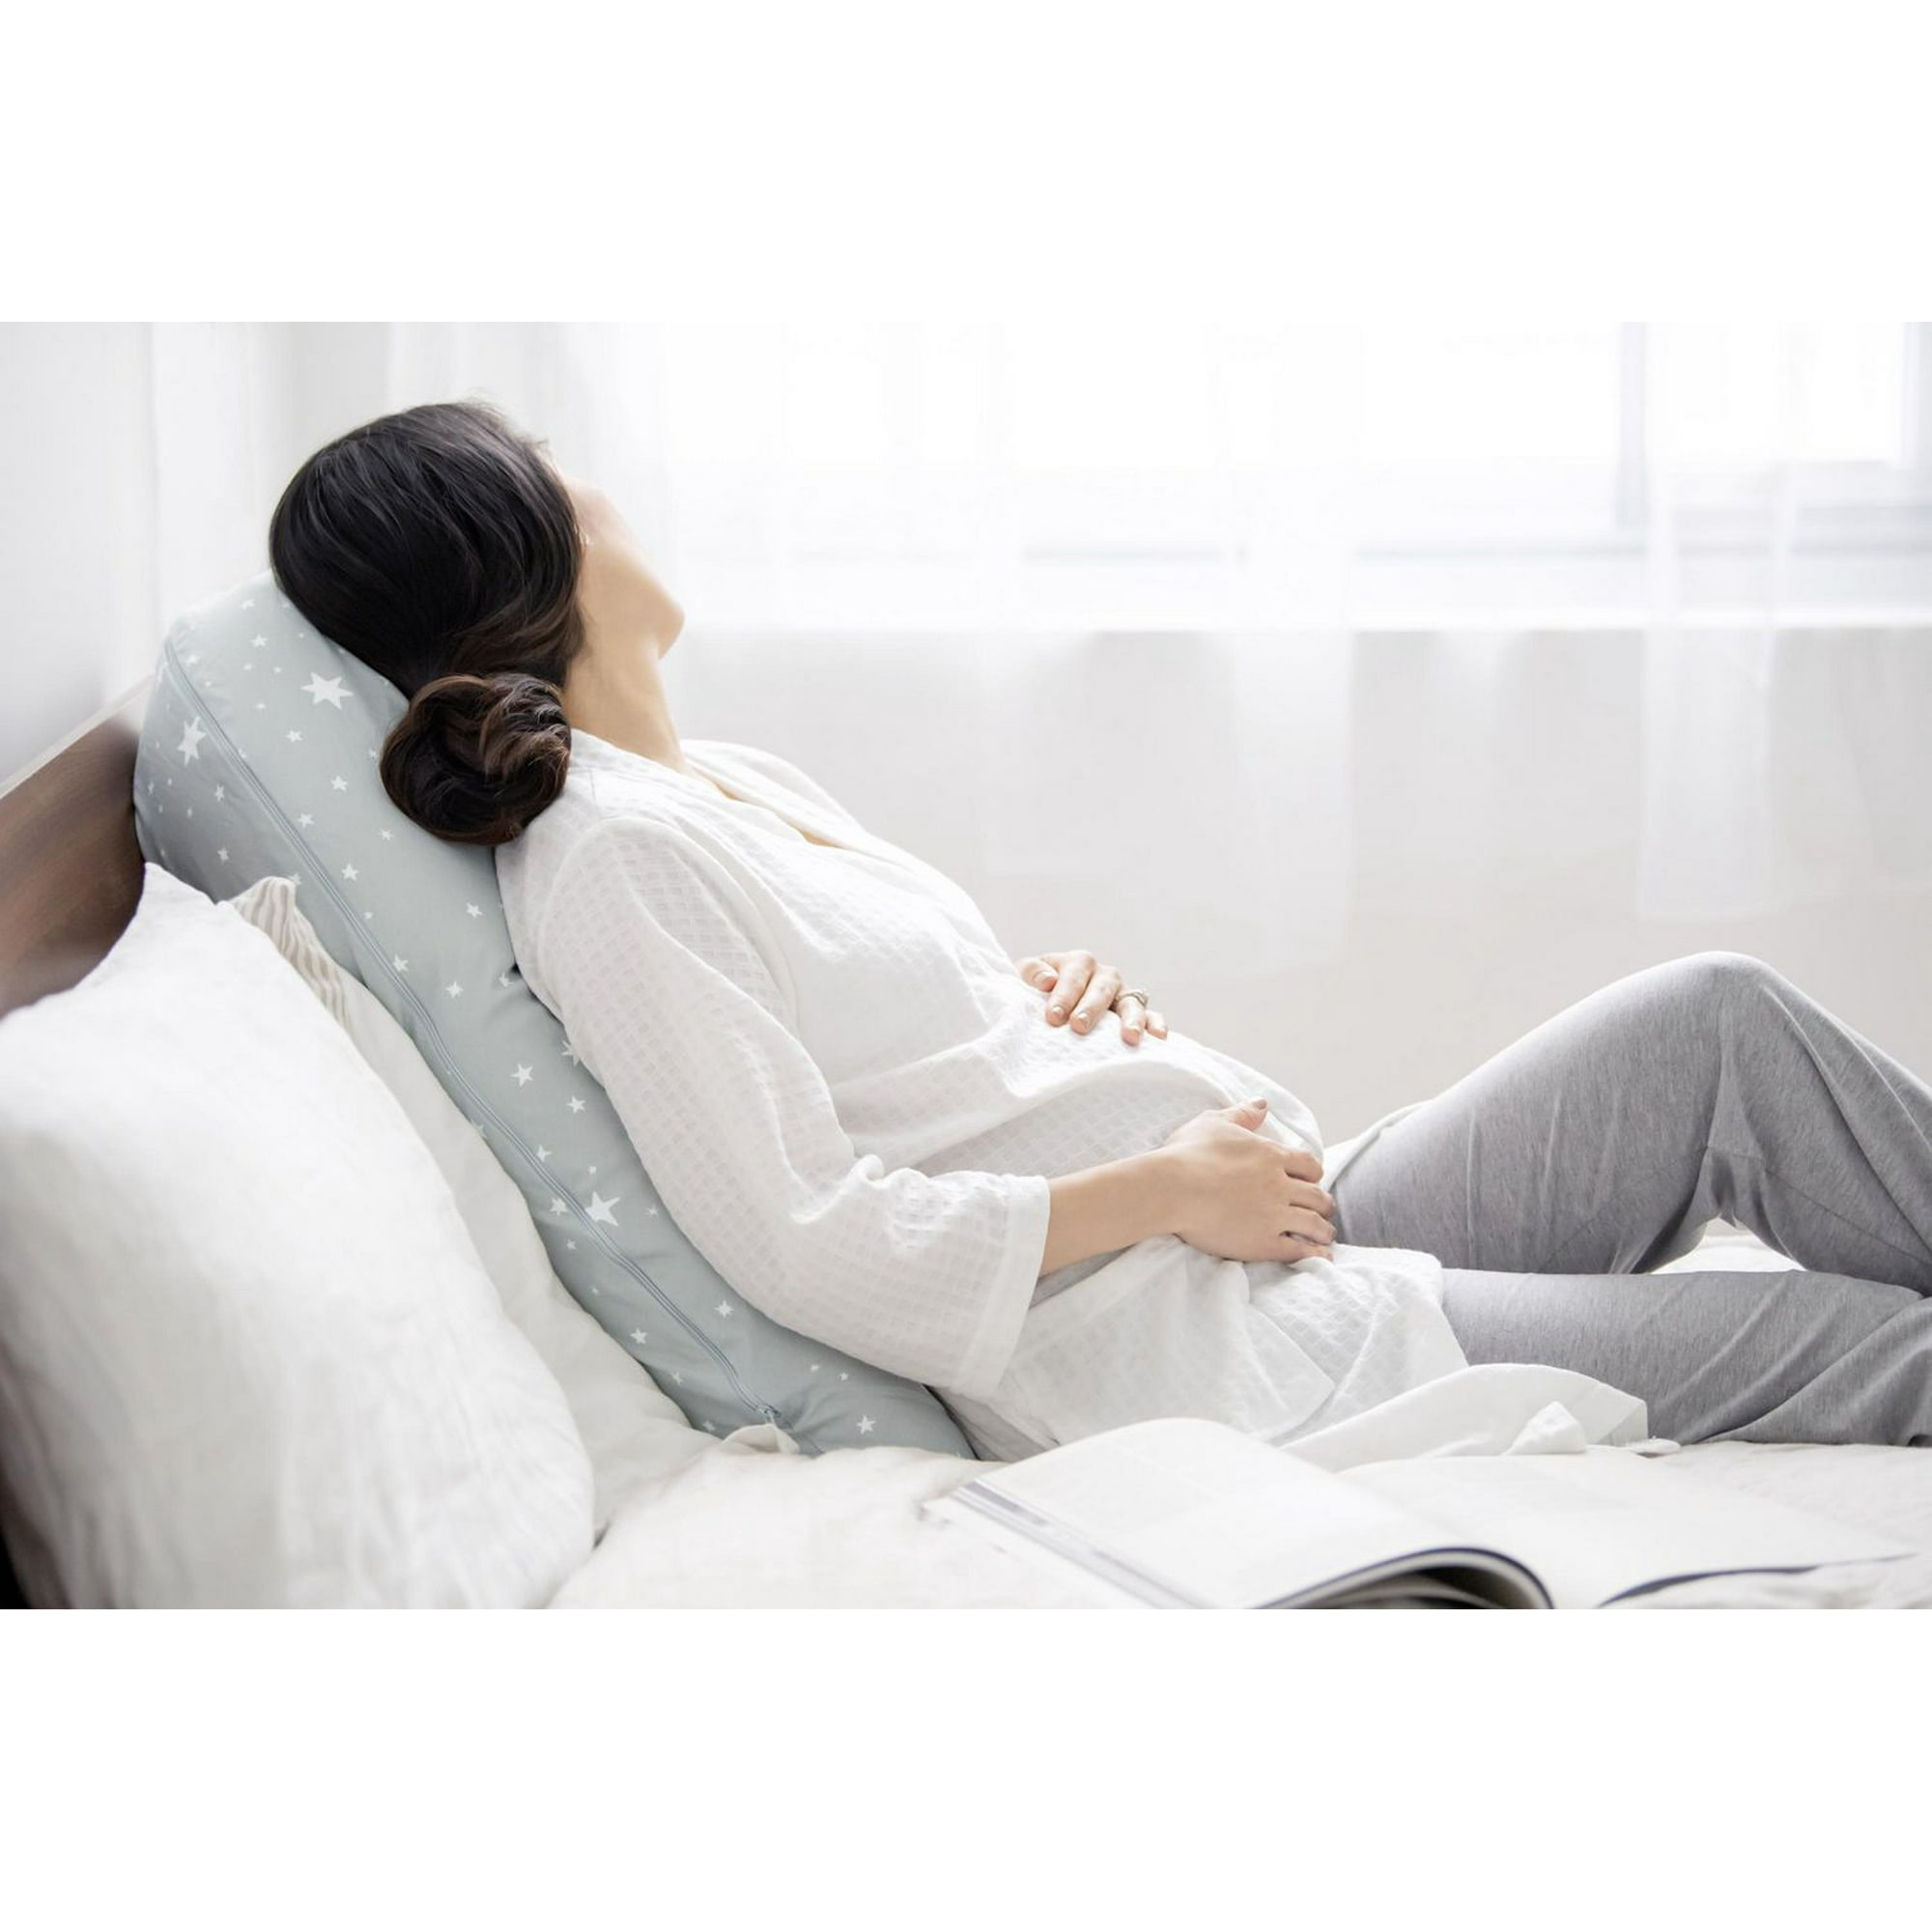 Medela maternity and nursing pillow – wing